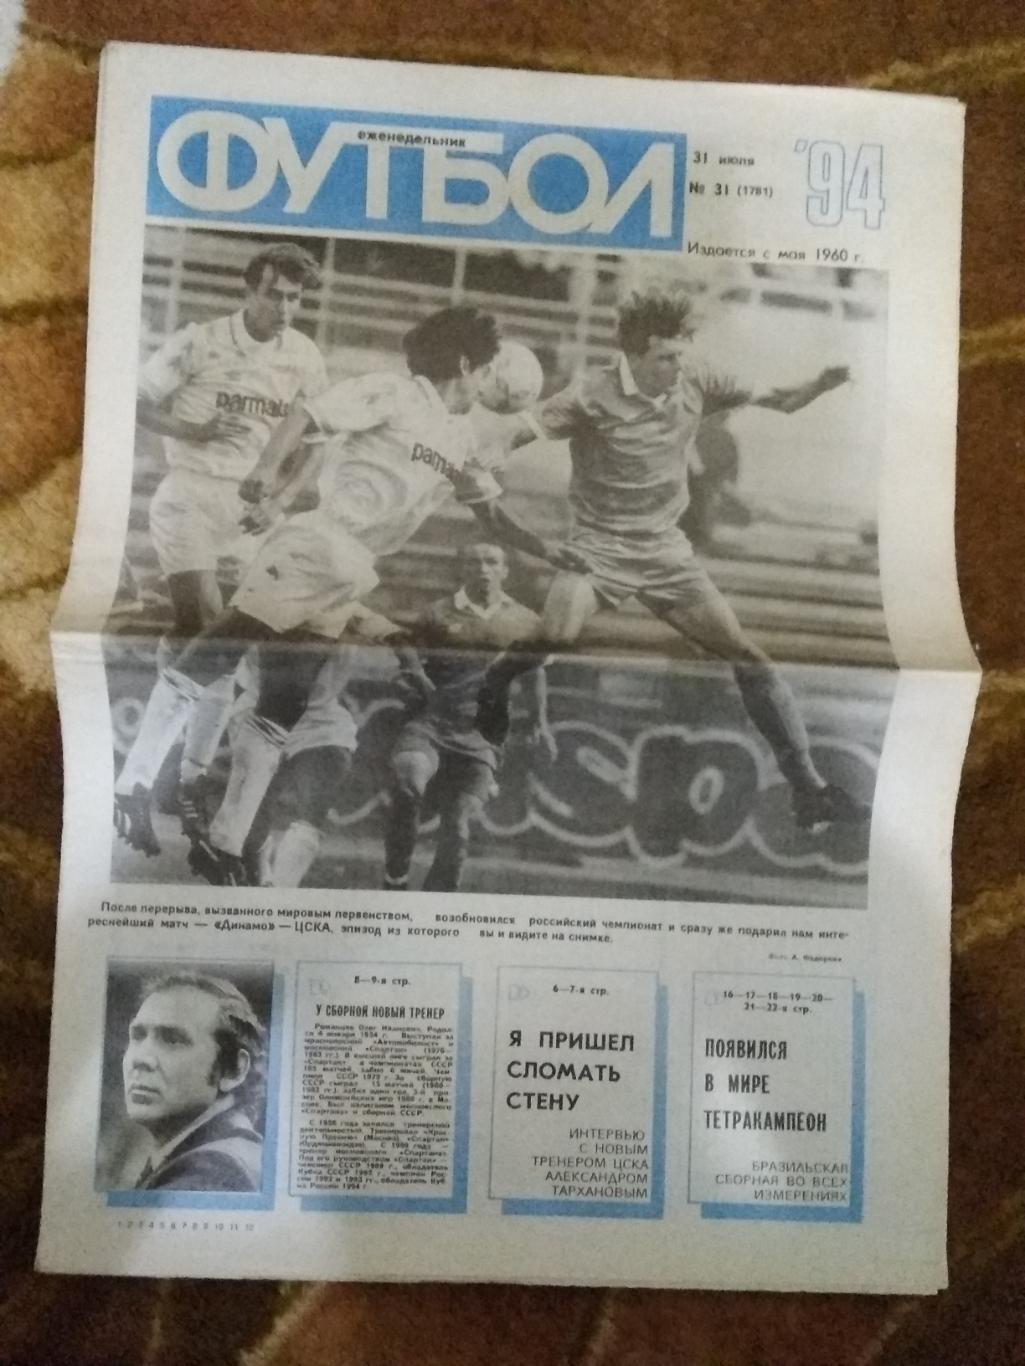 Футбол № 31 1994 г. (ЧМ США,Бразилия).